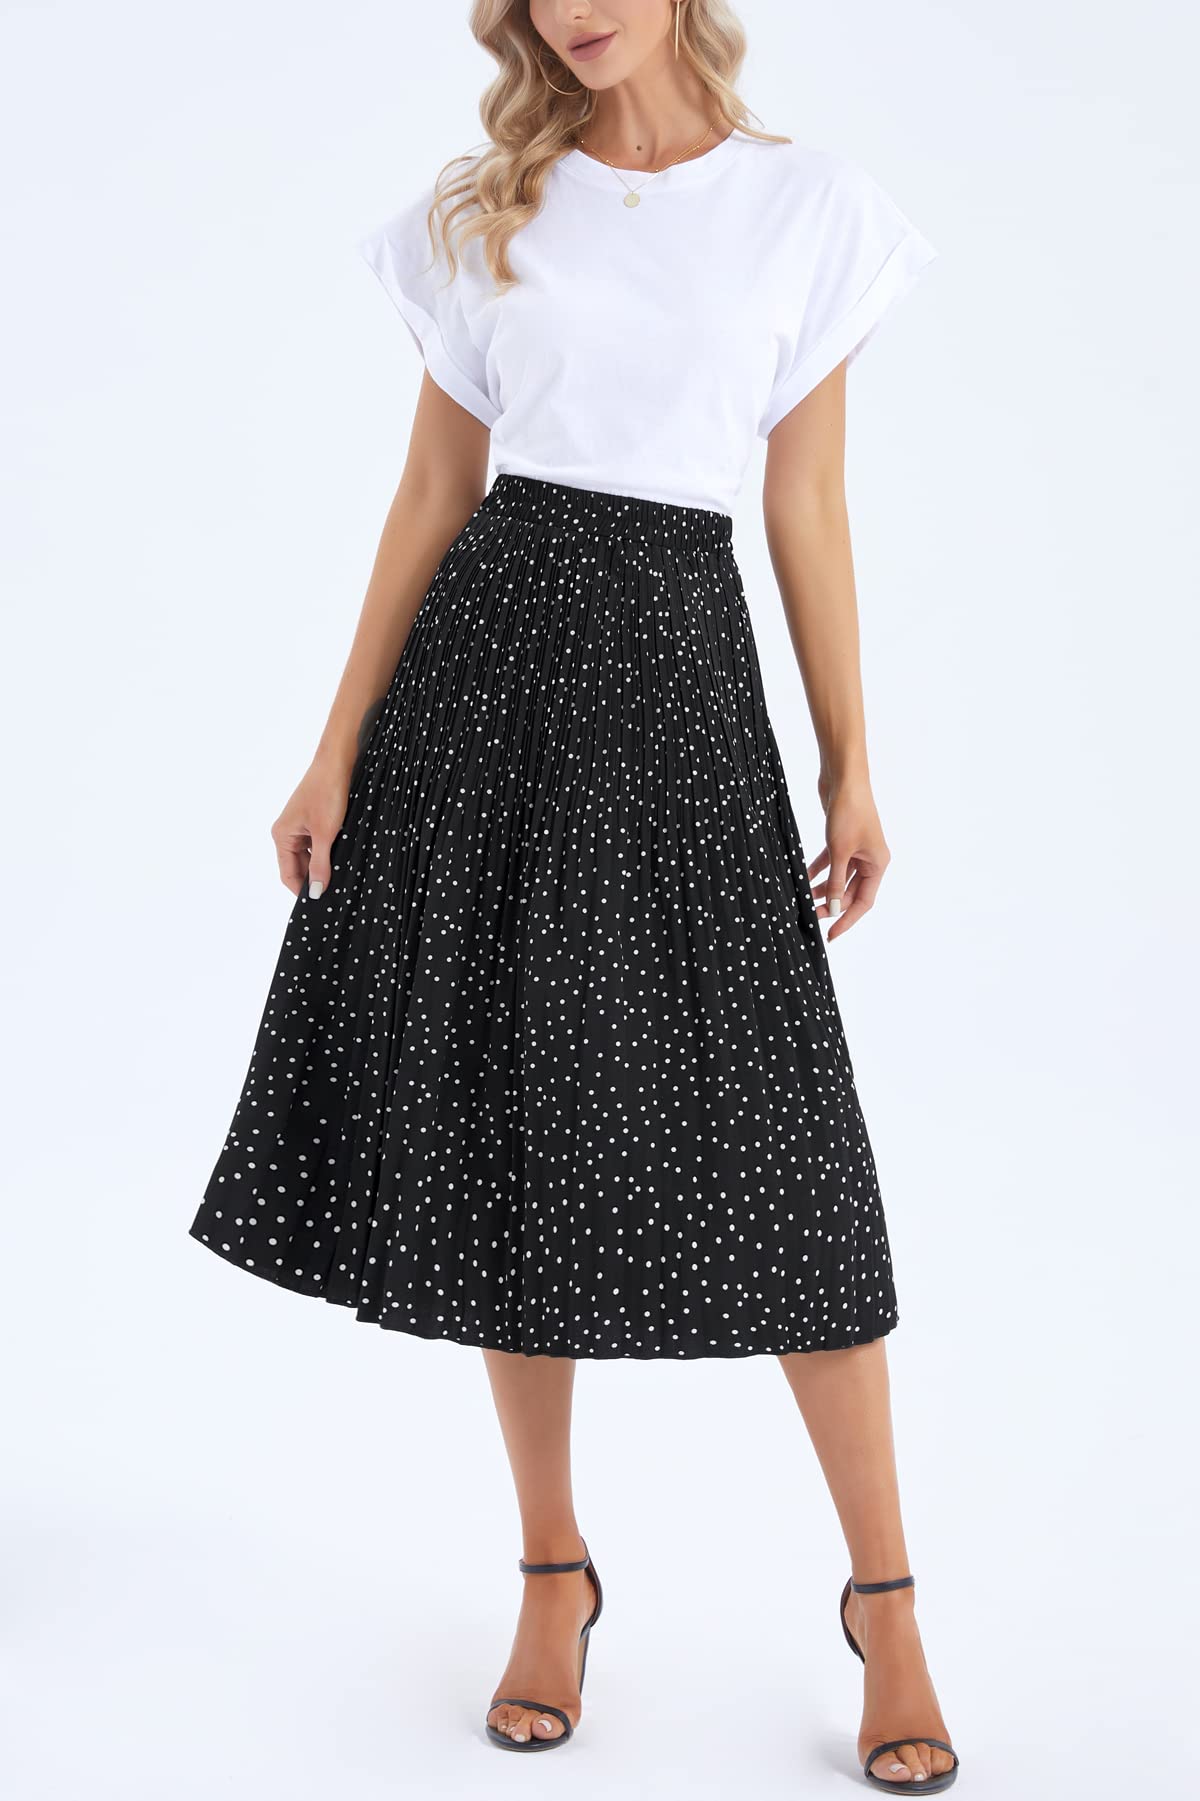 DJT High Waist A-Line Pleated SkirtFASHION Black Polka Dots Womens Elastic Polka Dot Midi Swing Skirt